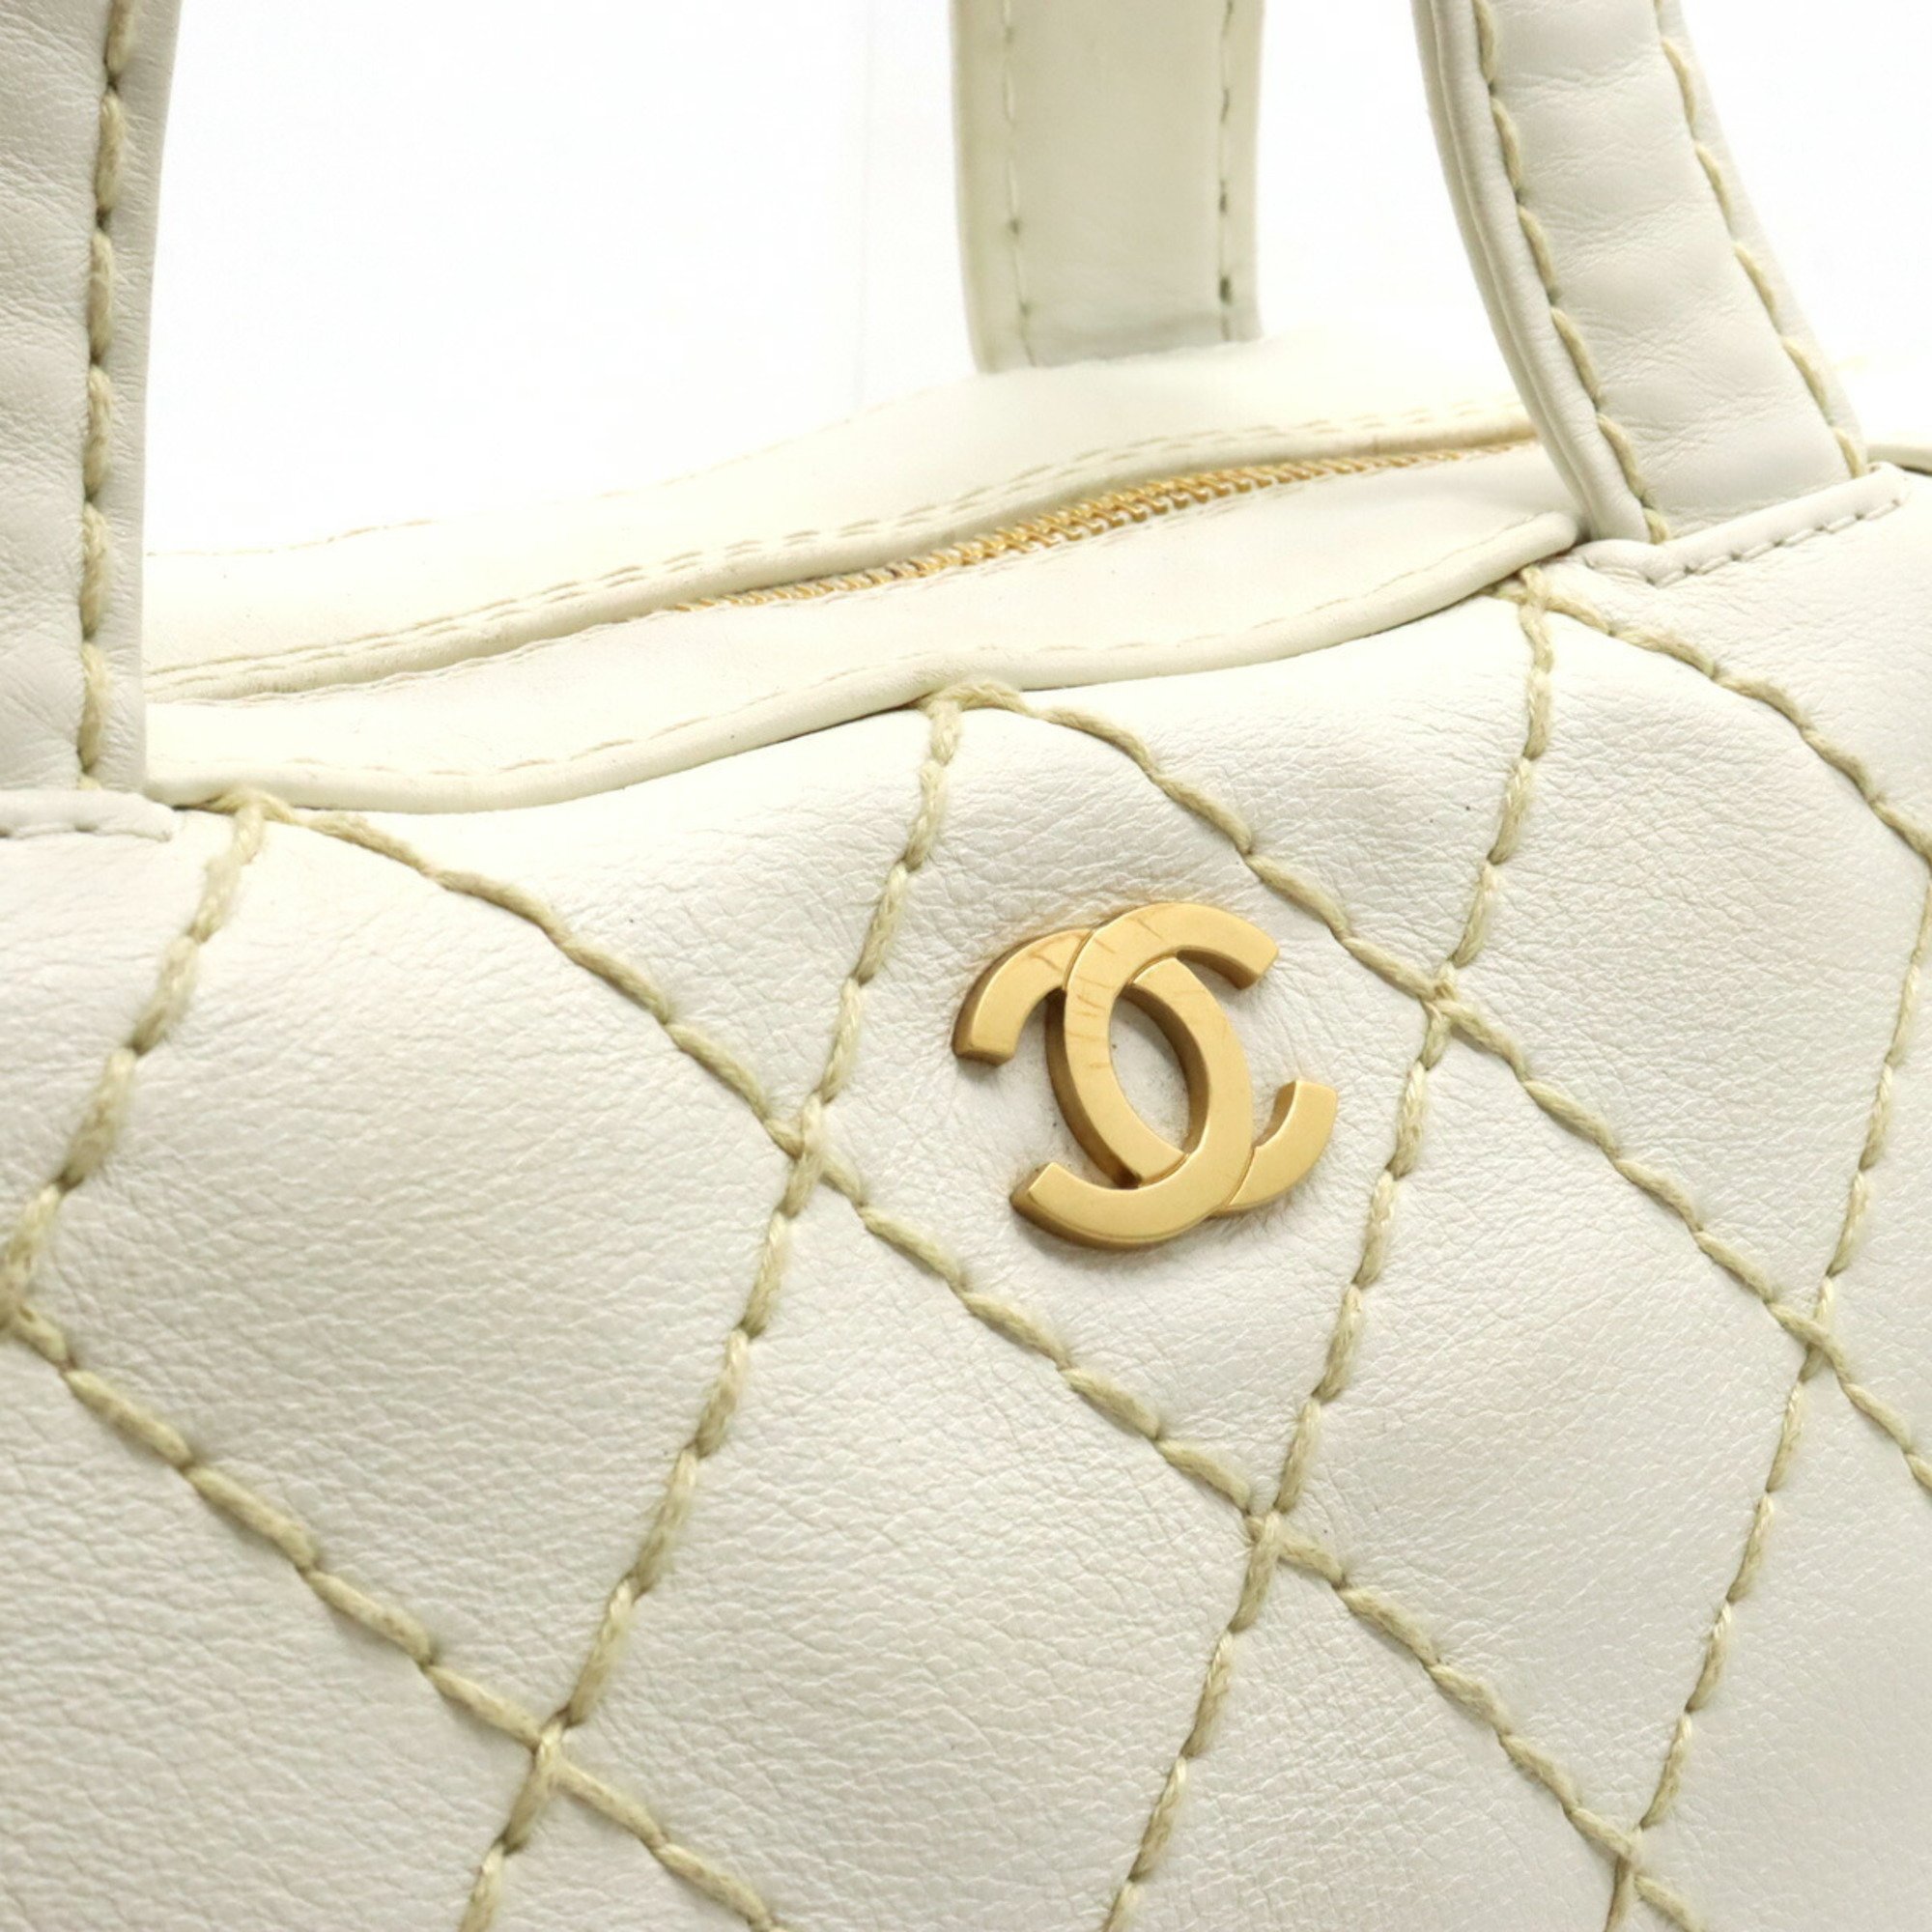 CHANEL Wild Stitch Handbag Boston Bag Leather White A14692